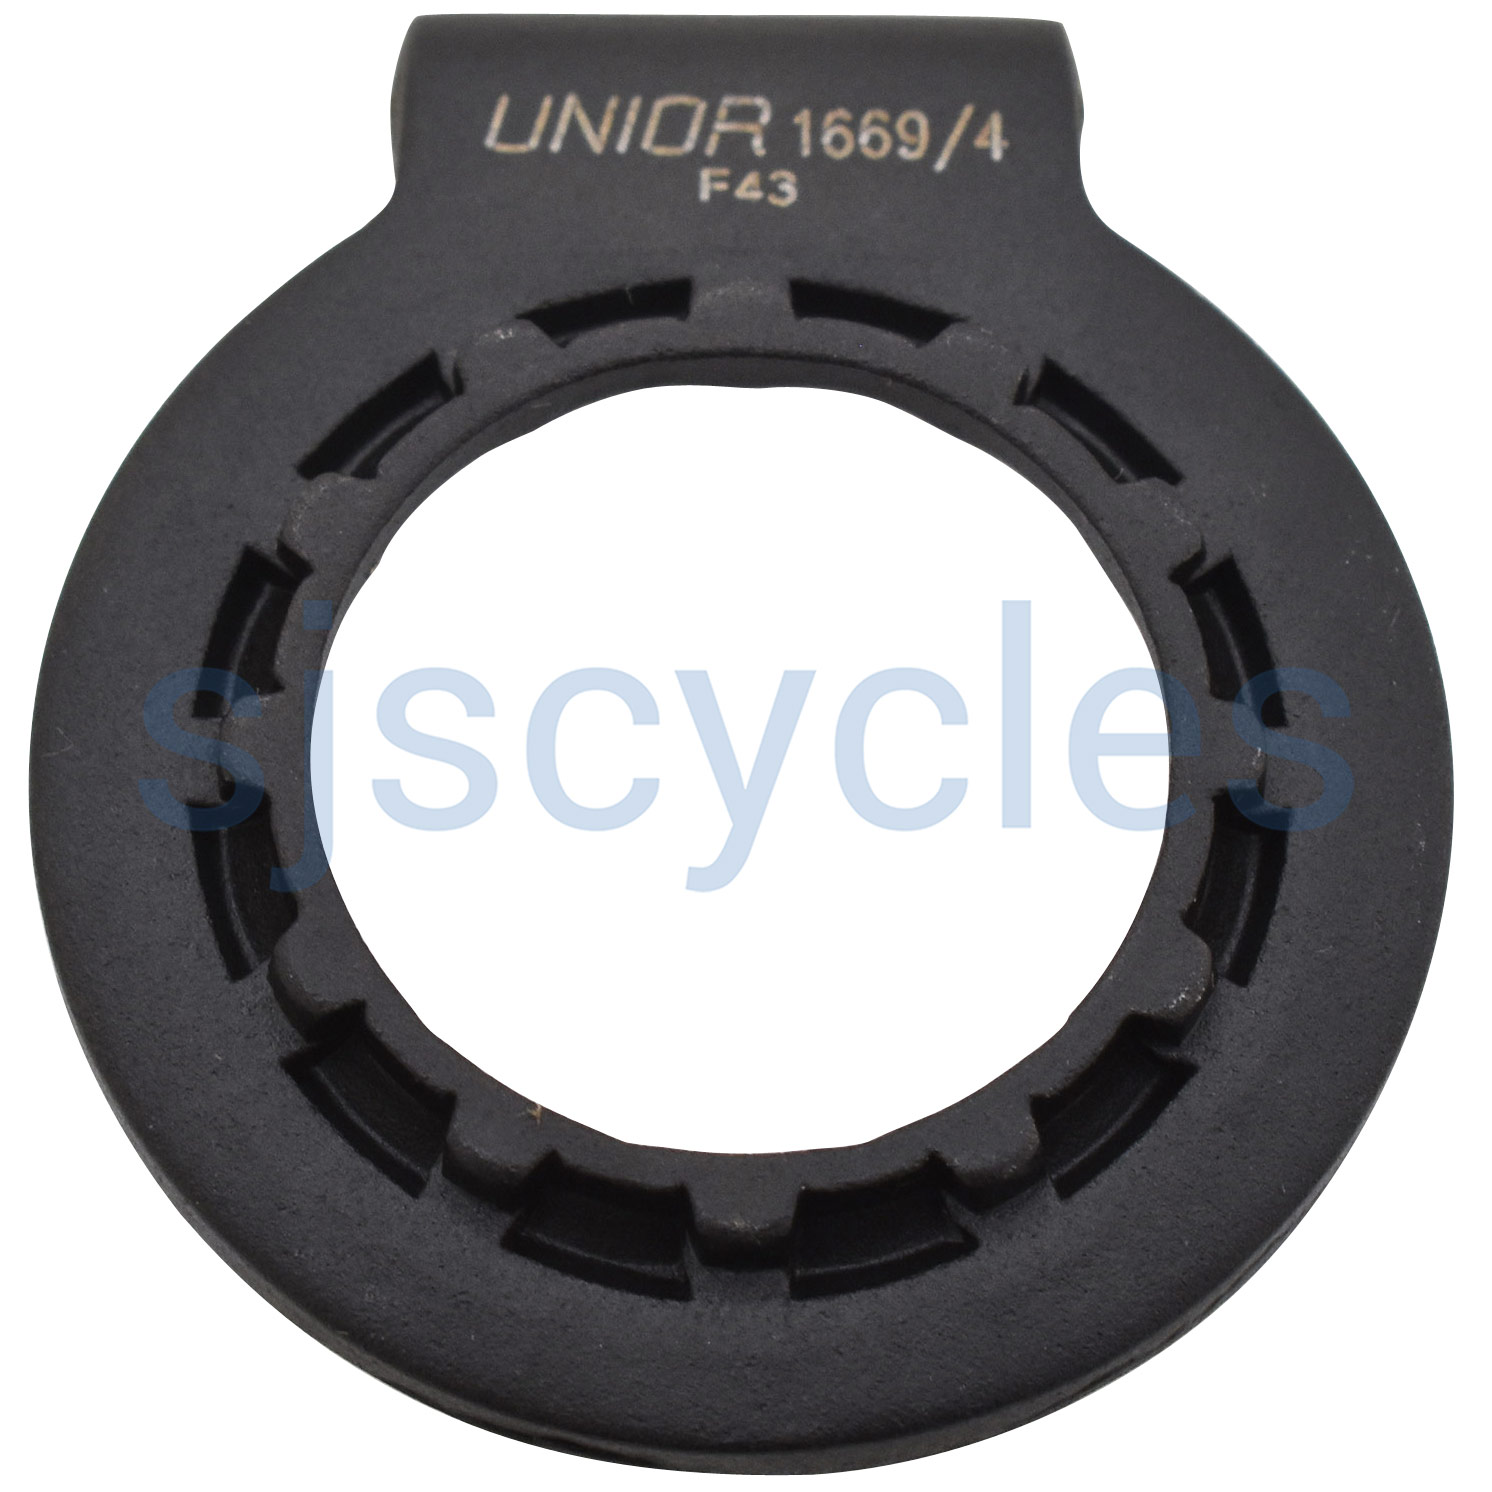 Unior Pocket Spoke And Cassette Freewheel Remover Wrench 1669/4 